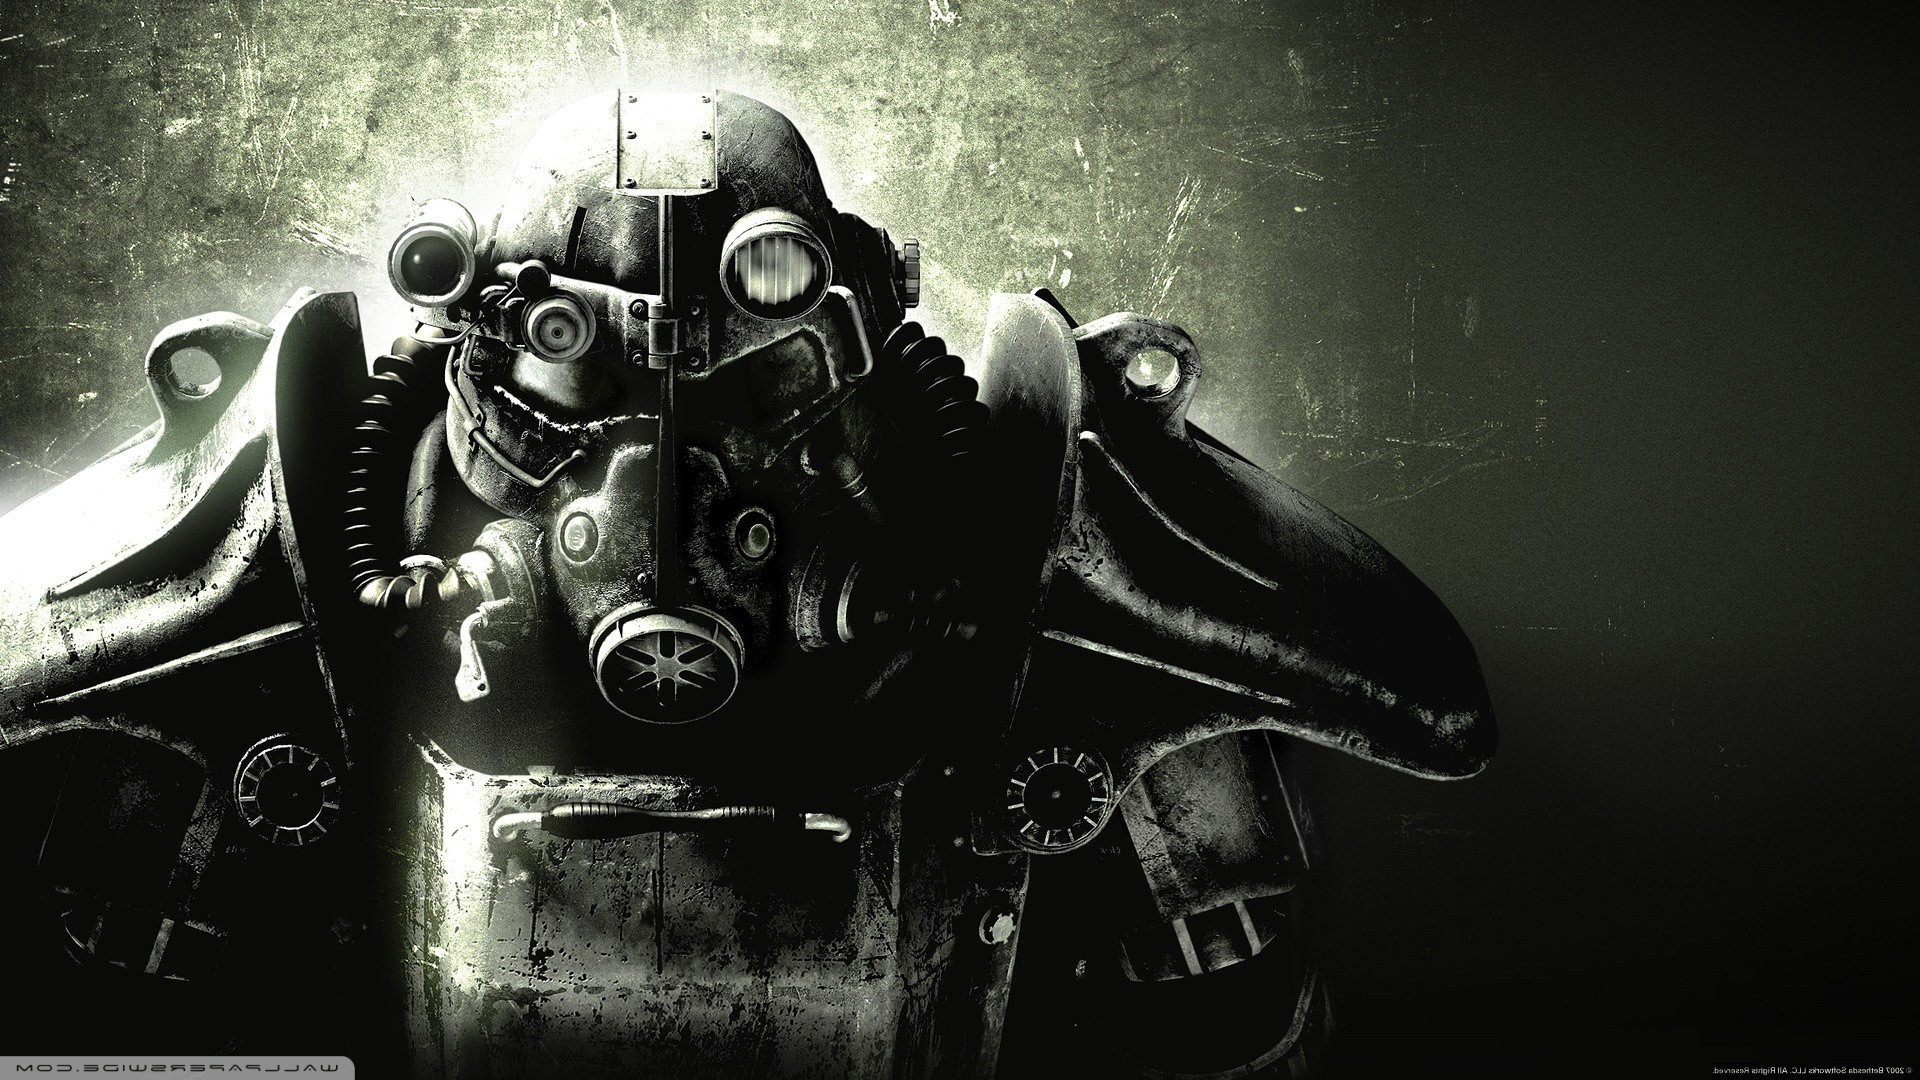 Fallout 3, Brotherhood of Steel